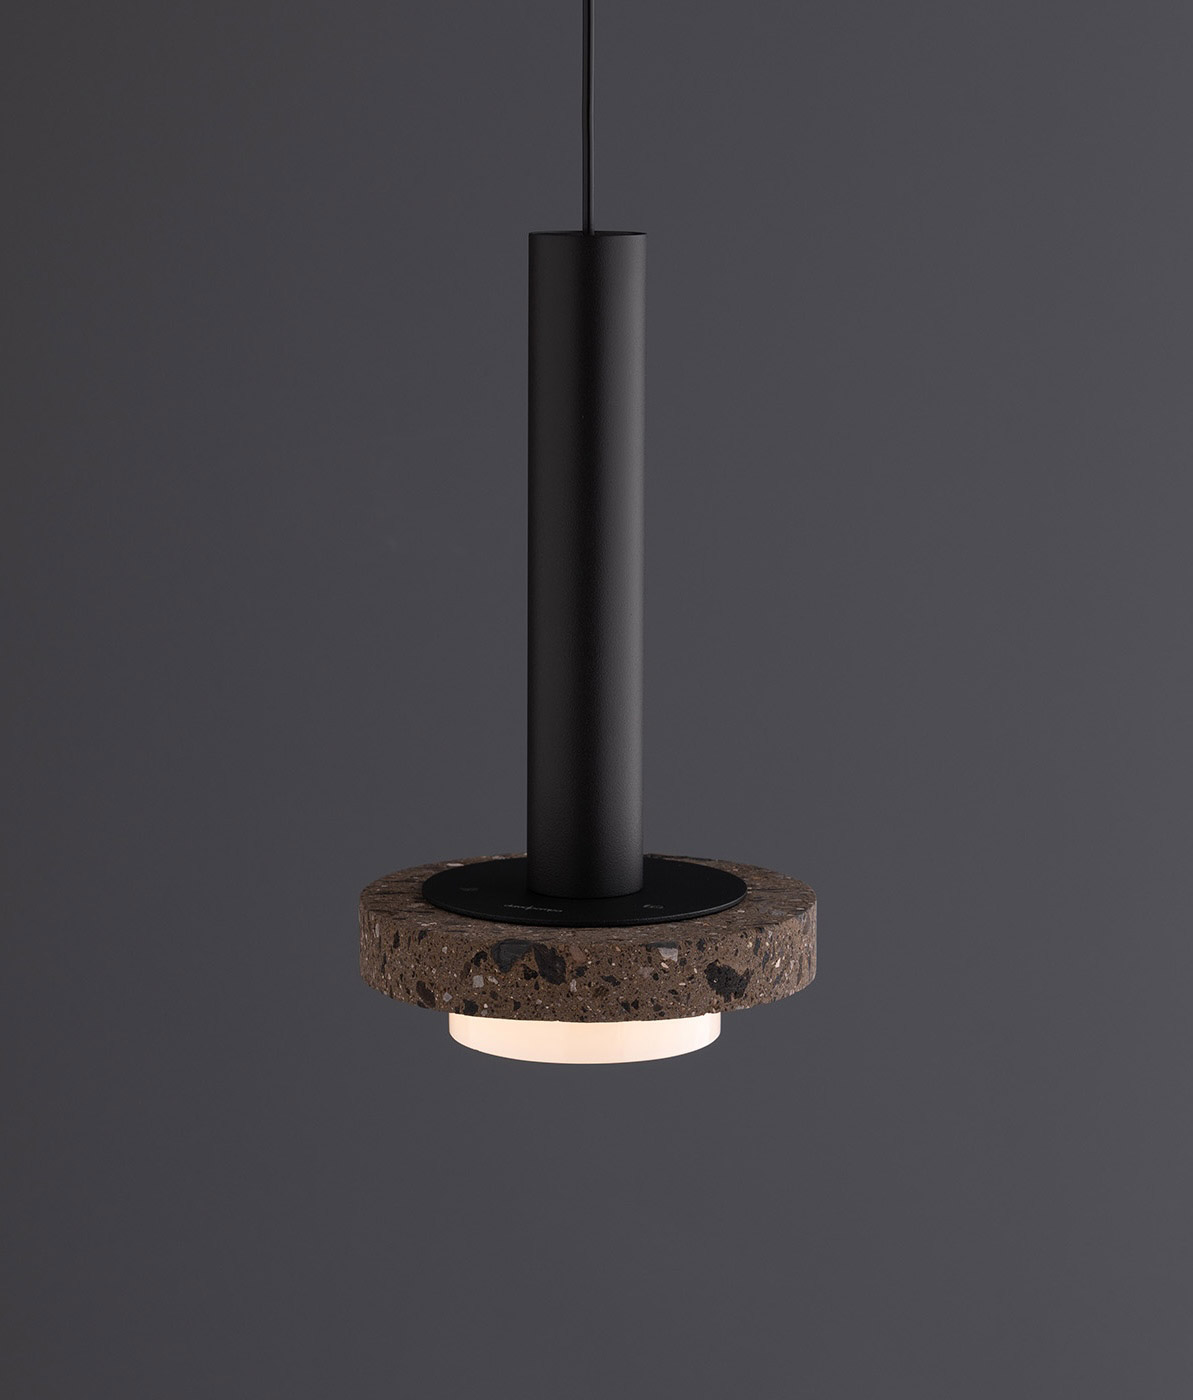 Ambra Ambra pendant Lamp by studio davidpompa